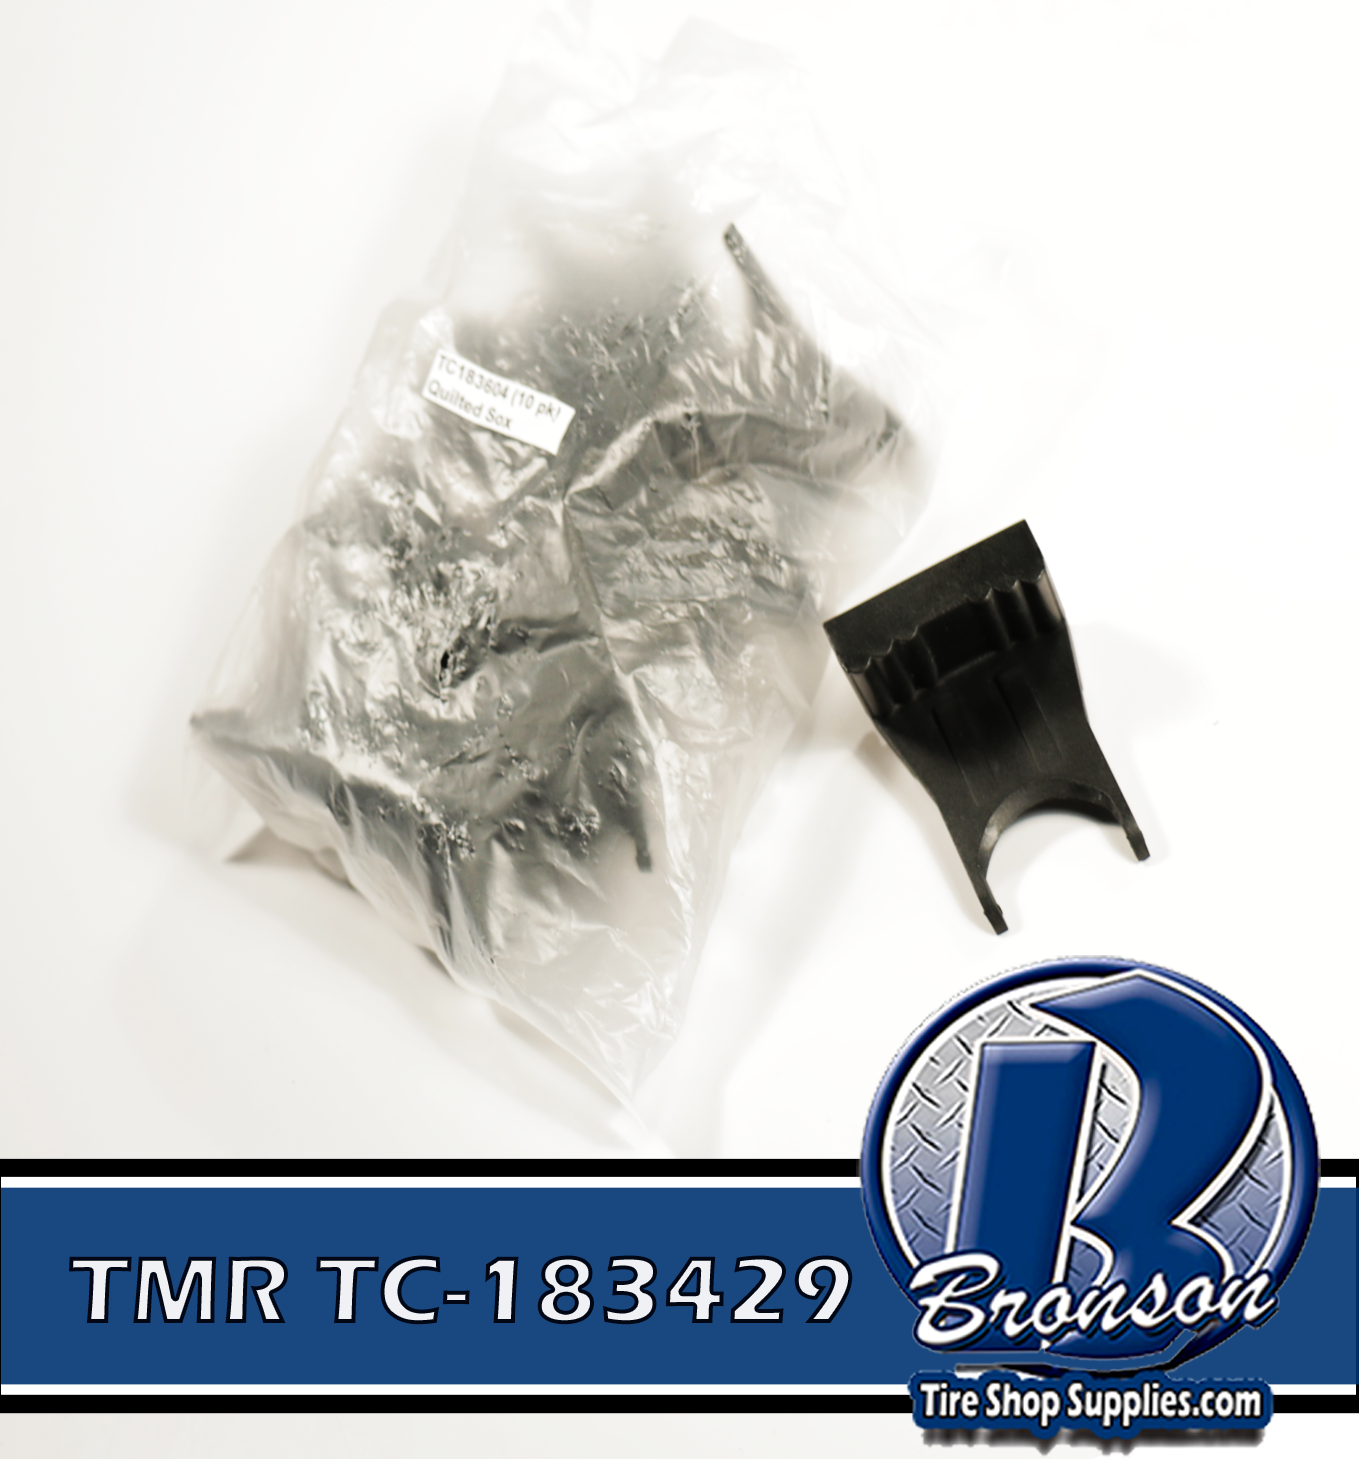 TMR TC-183604-10 Quilted 